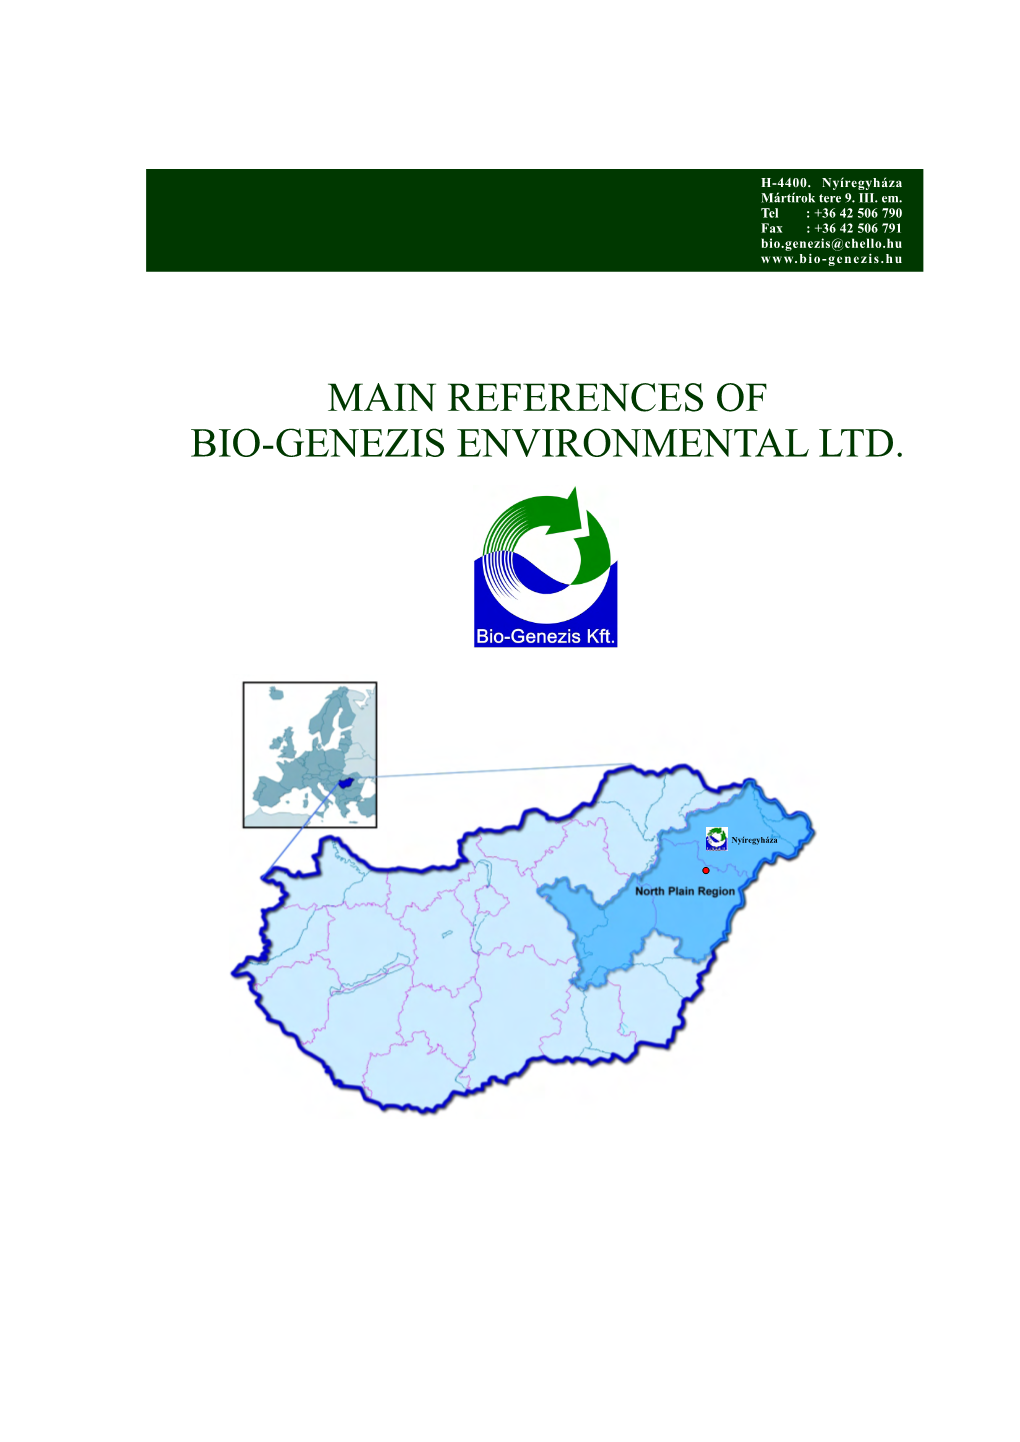 References of Bio-Genezis Environmental Ltd